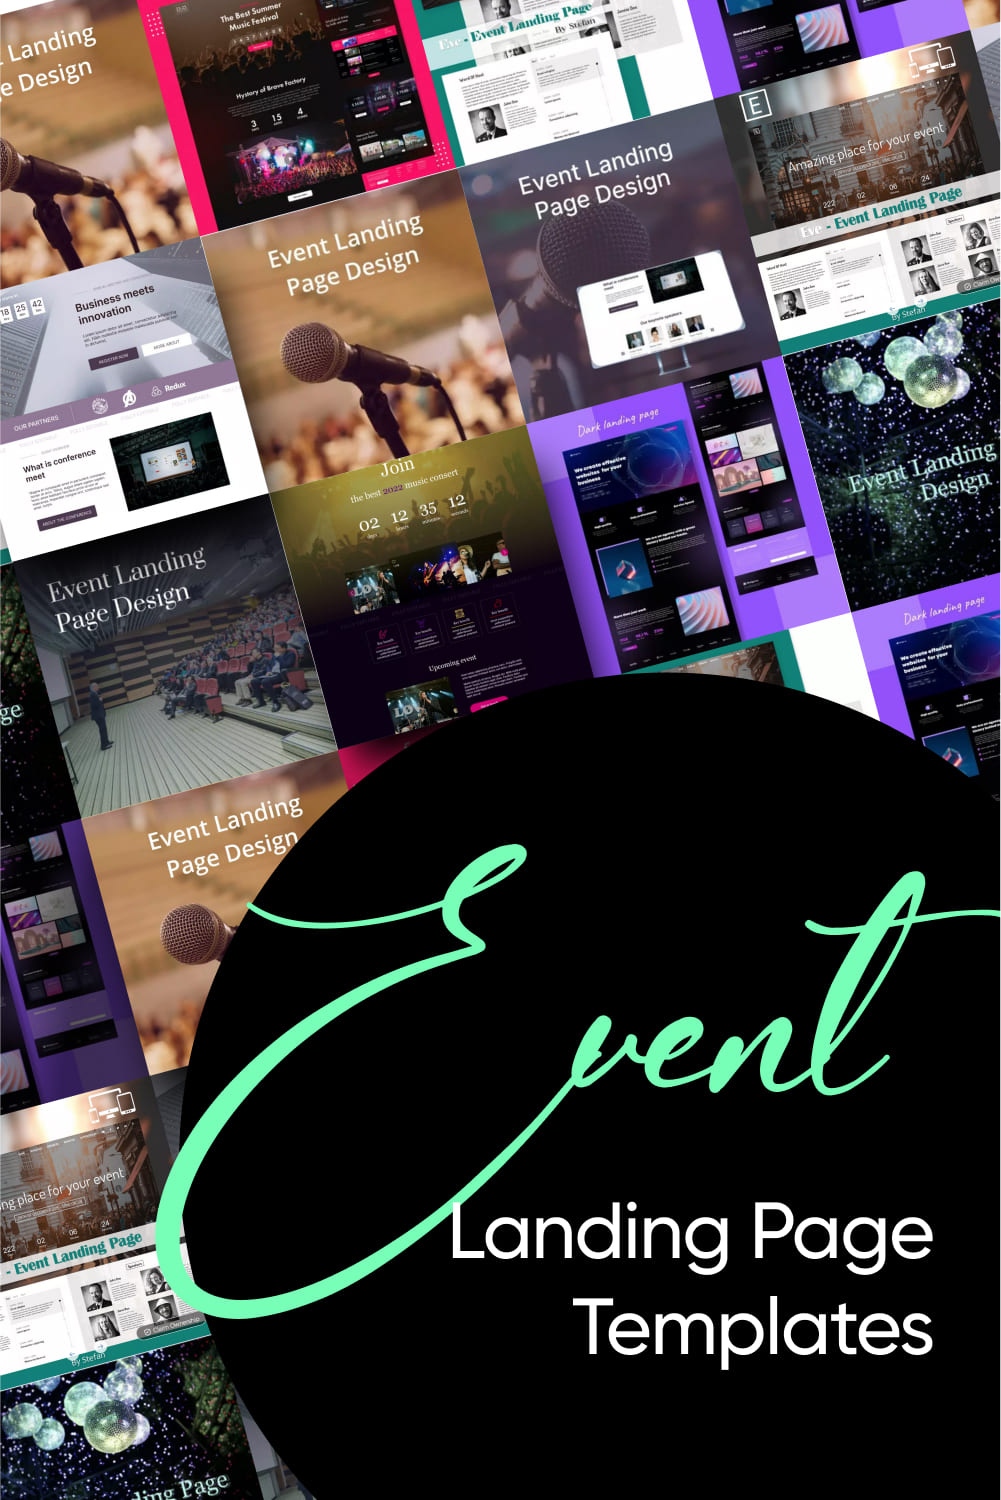 Event Landing Page Templates Pinterest.